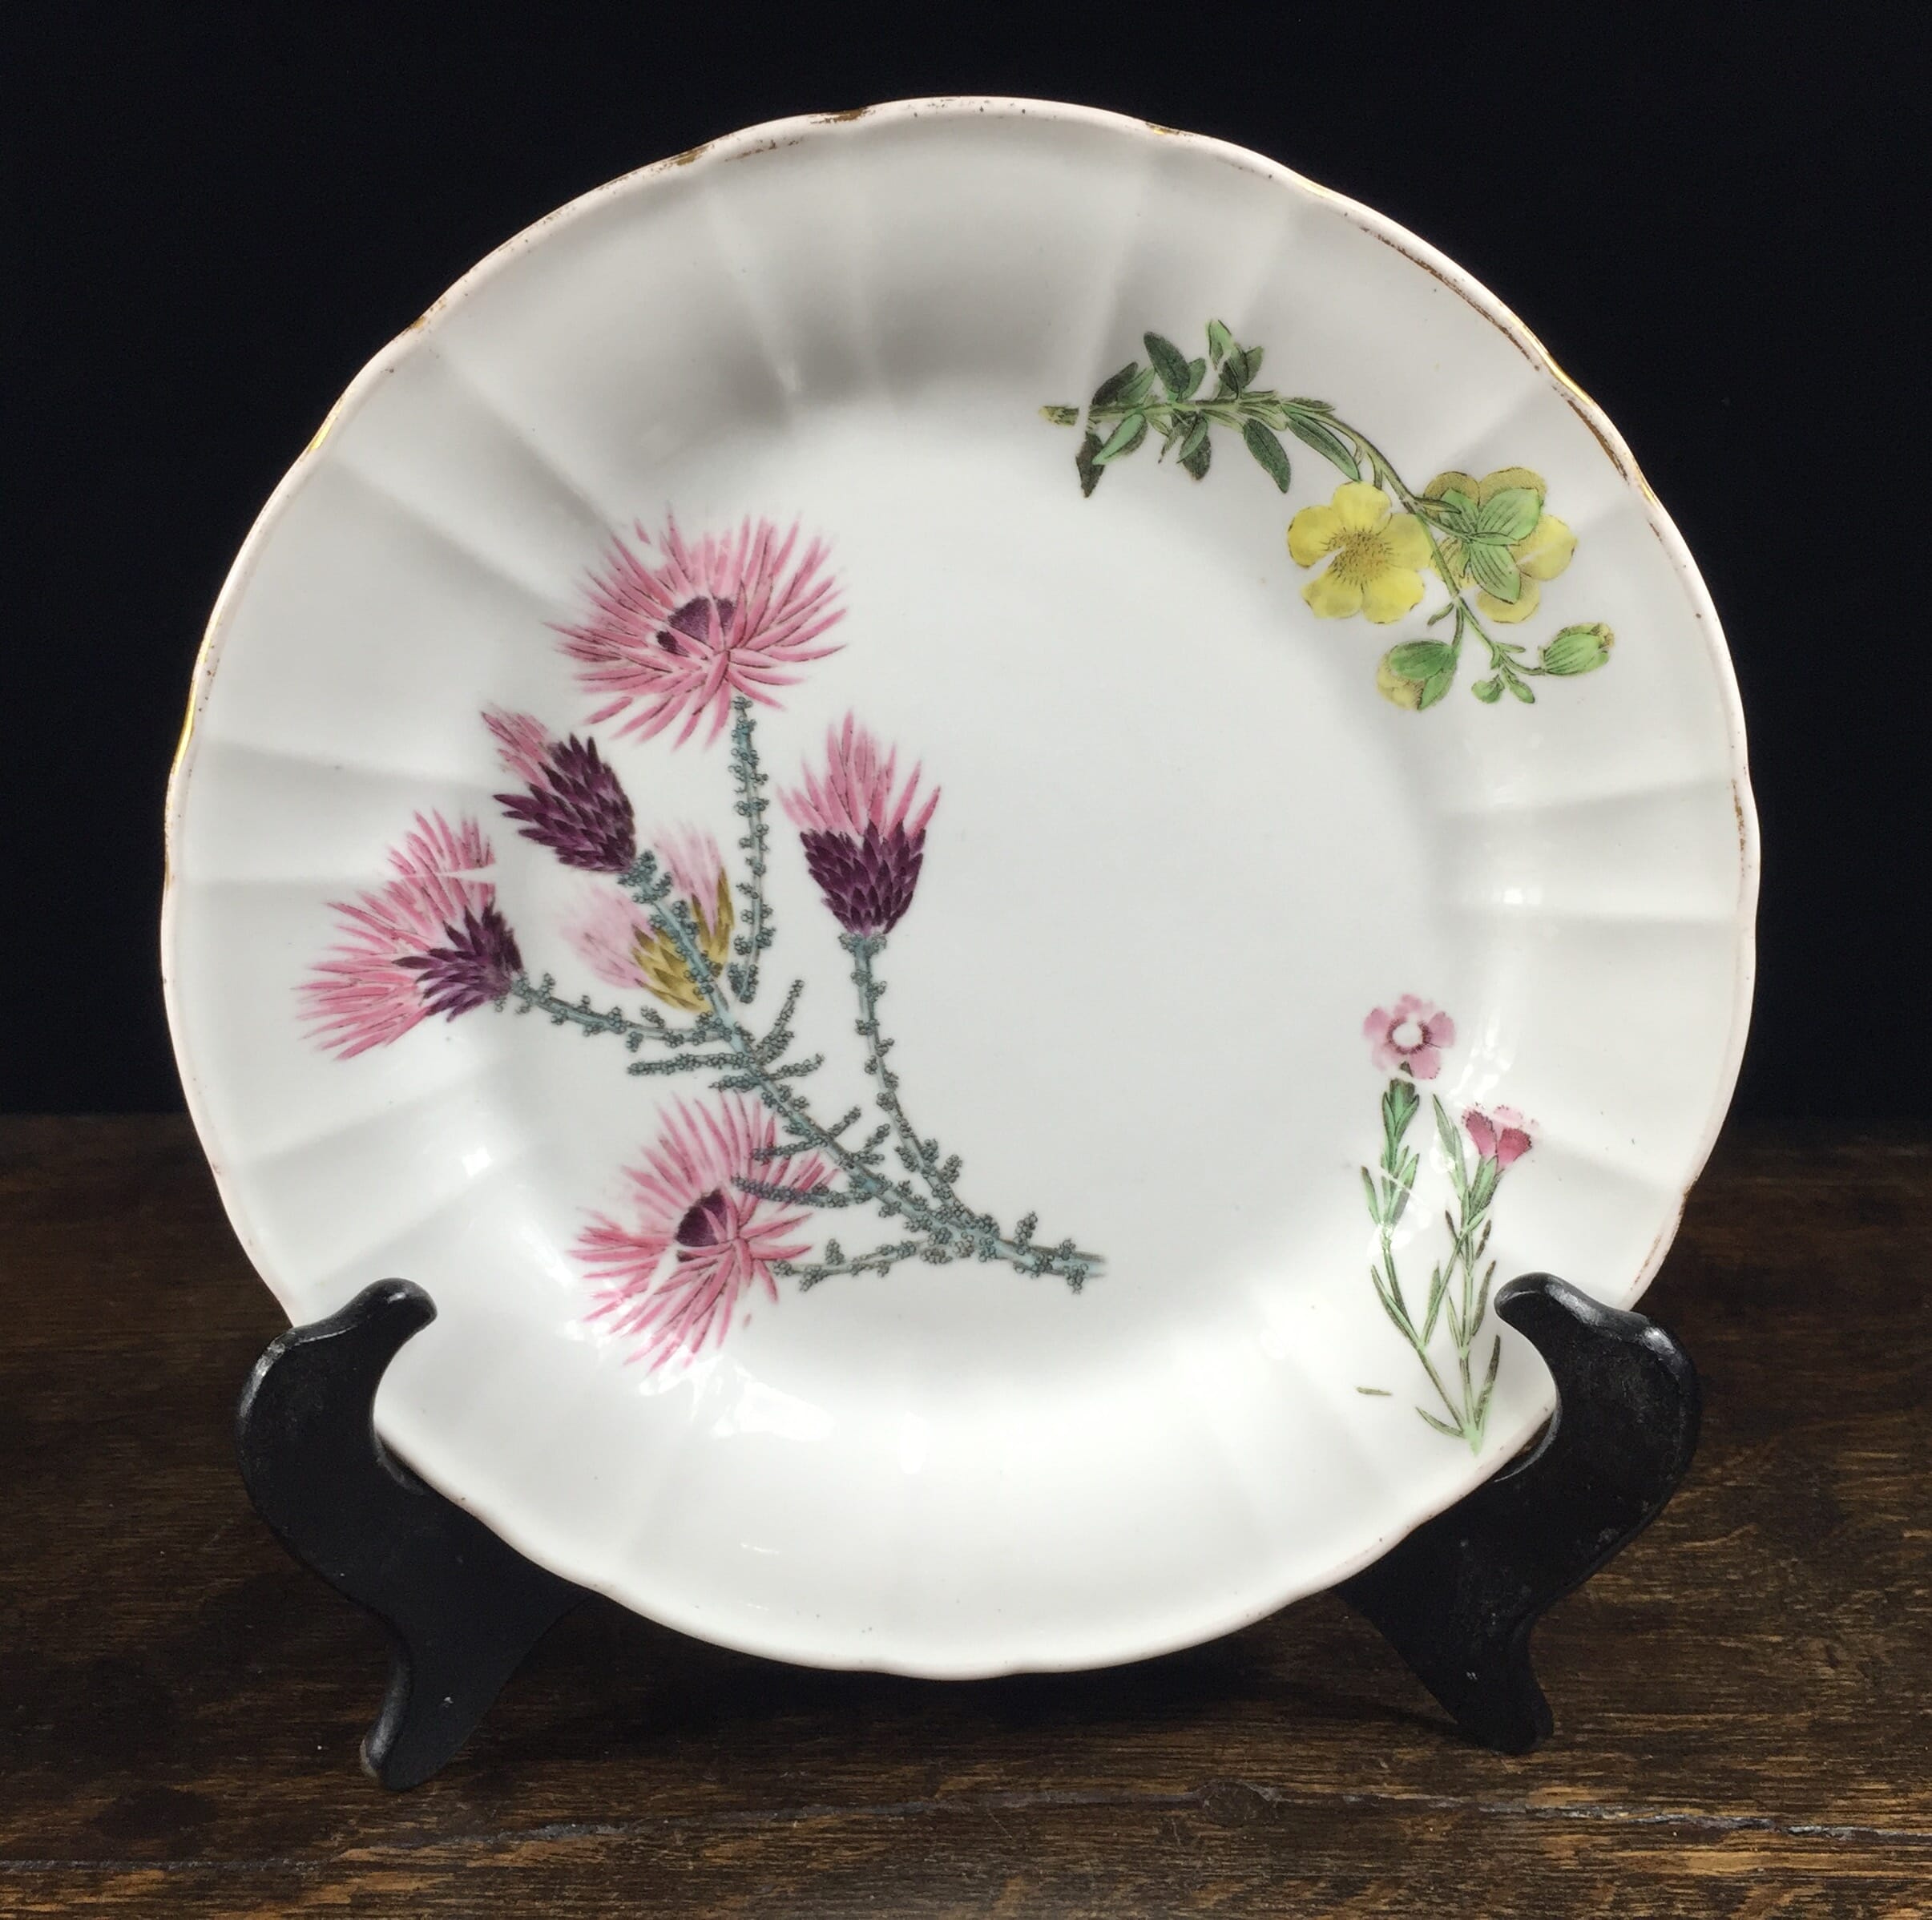 Wedgwood bone china plate, flower specimen prints, C. 1815 -0